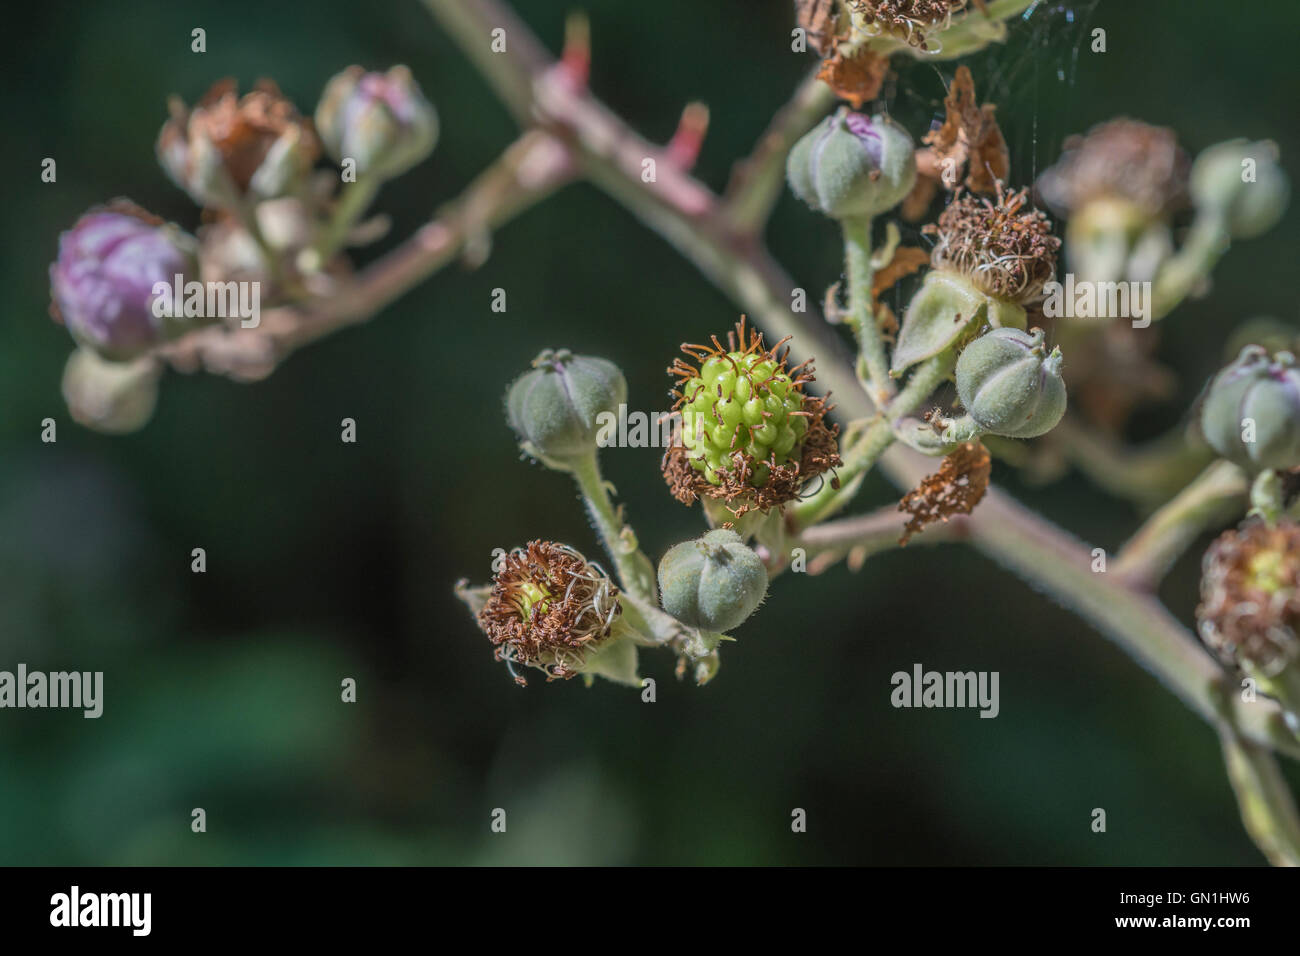 Unripe fruit and unopened flower buds of Bramble / Rubus sp. - blackberry shrub. Stock Photo